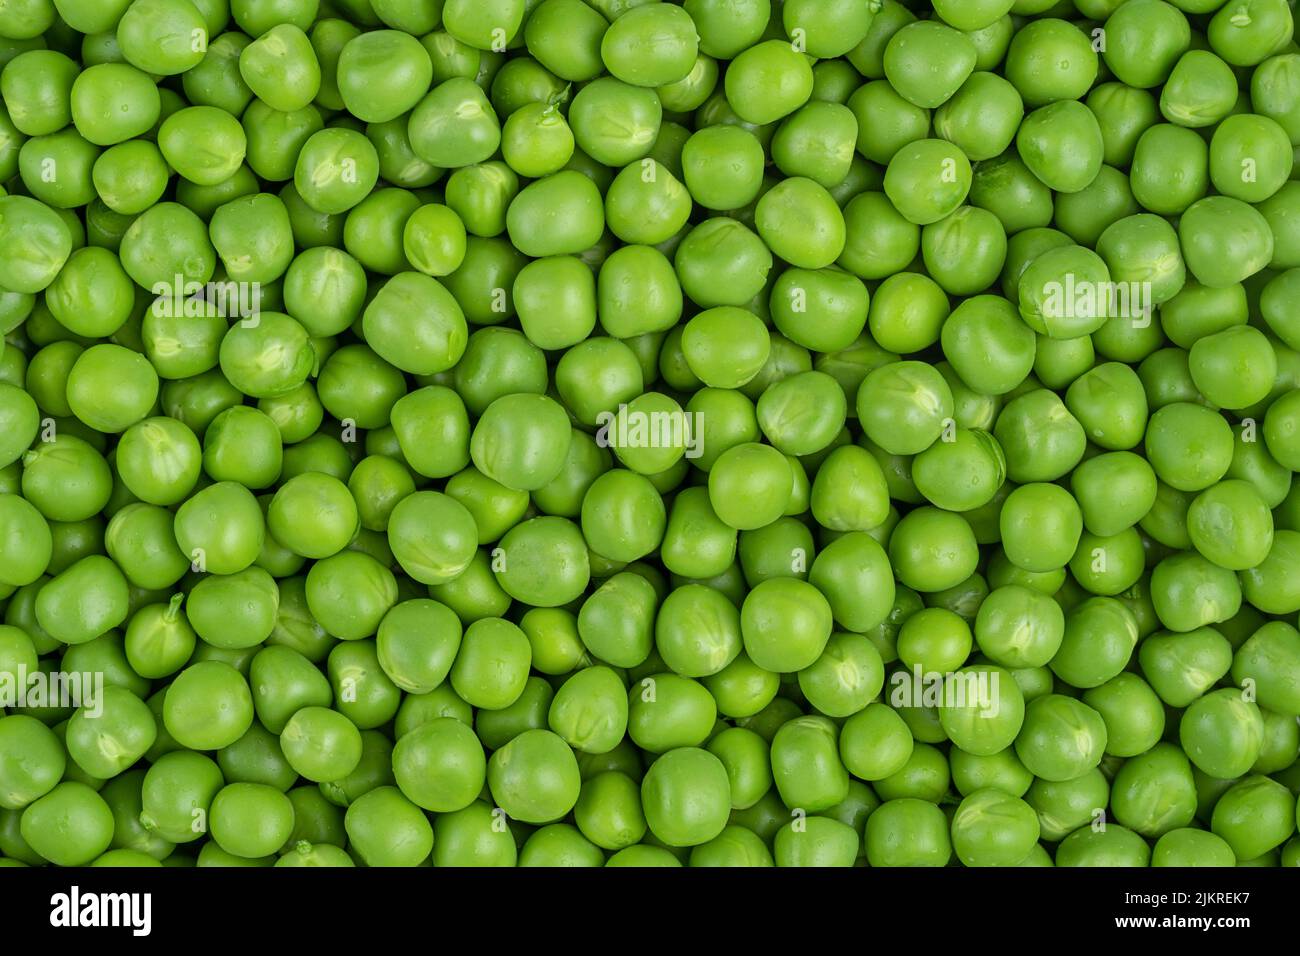 Green peas pattern, top view. Healthy vegetarian food Stock Photo